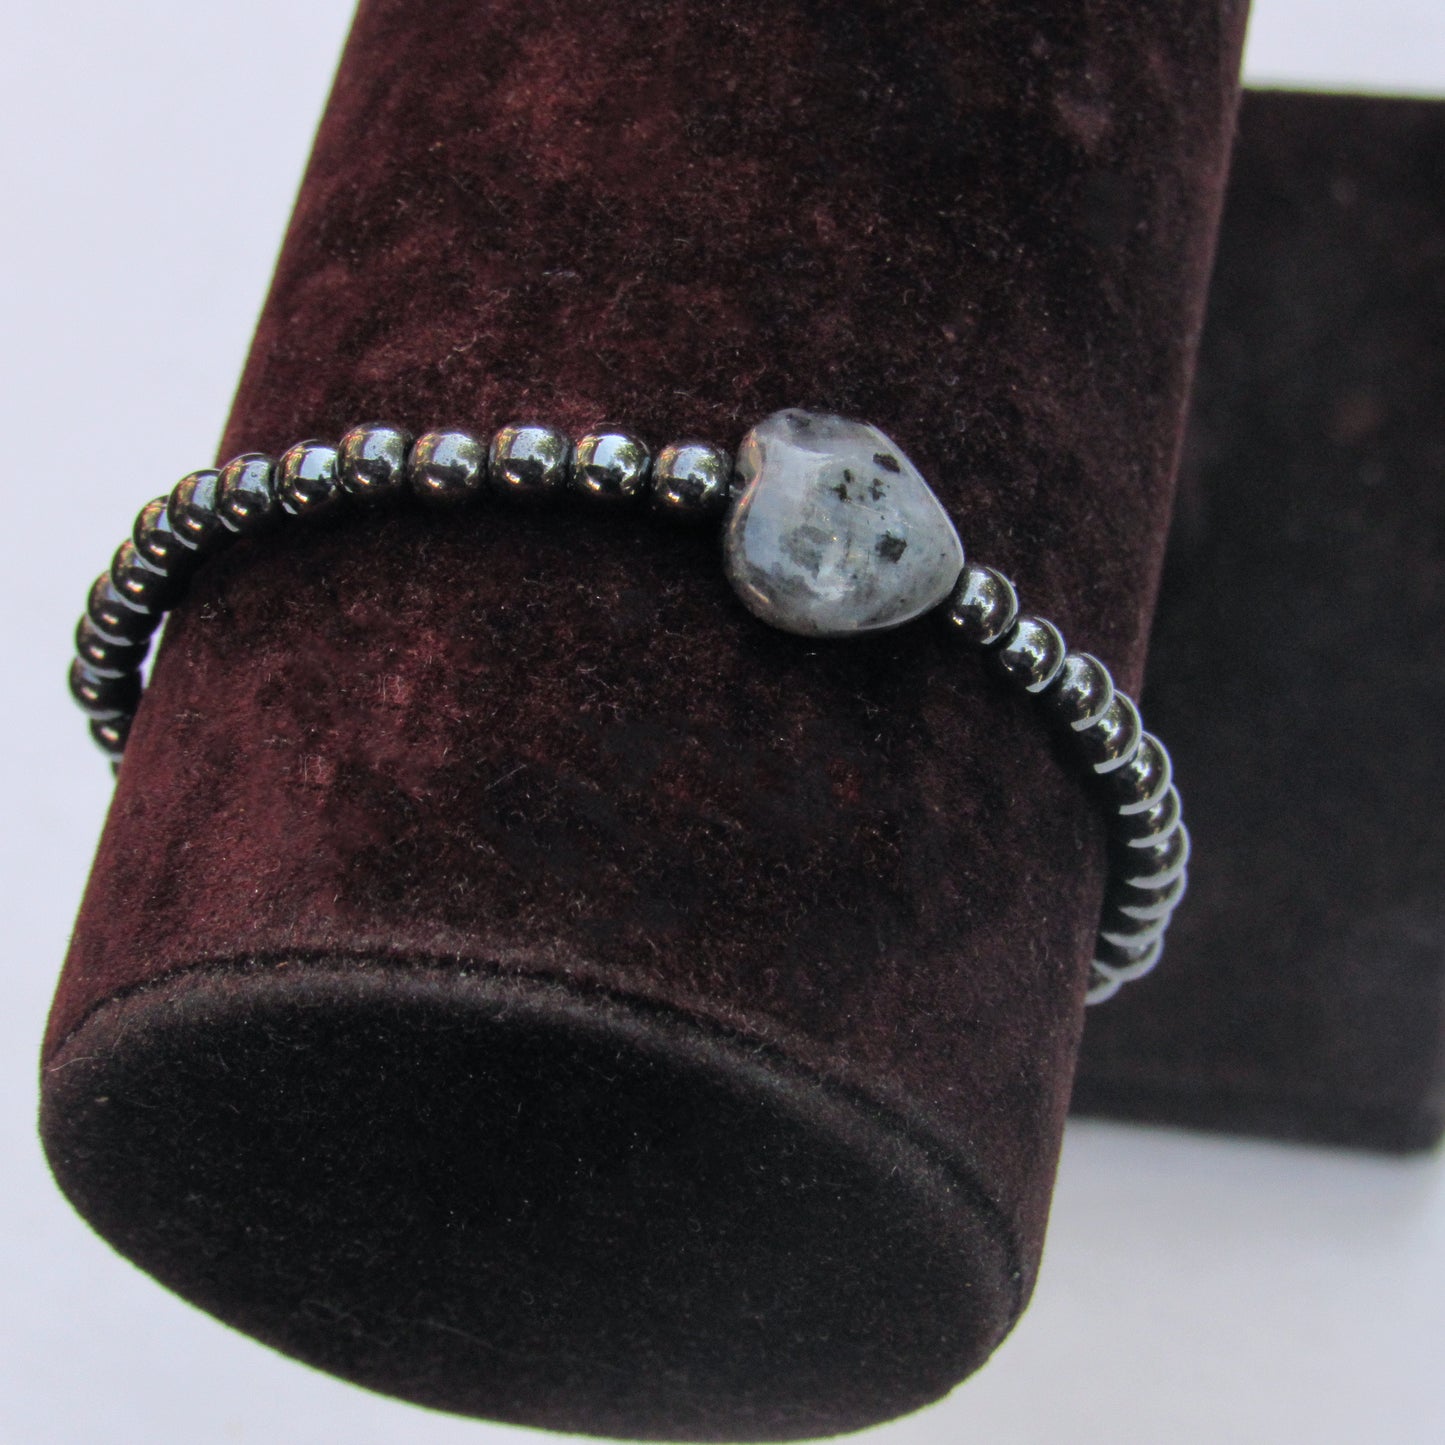 Hematite and Labradorite “Courage” Stretch Bracelet